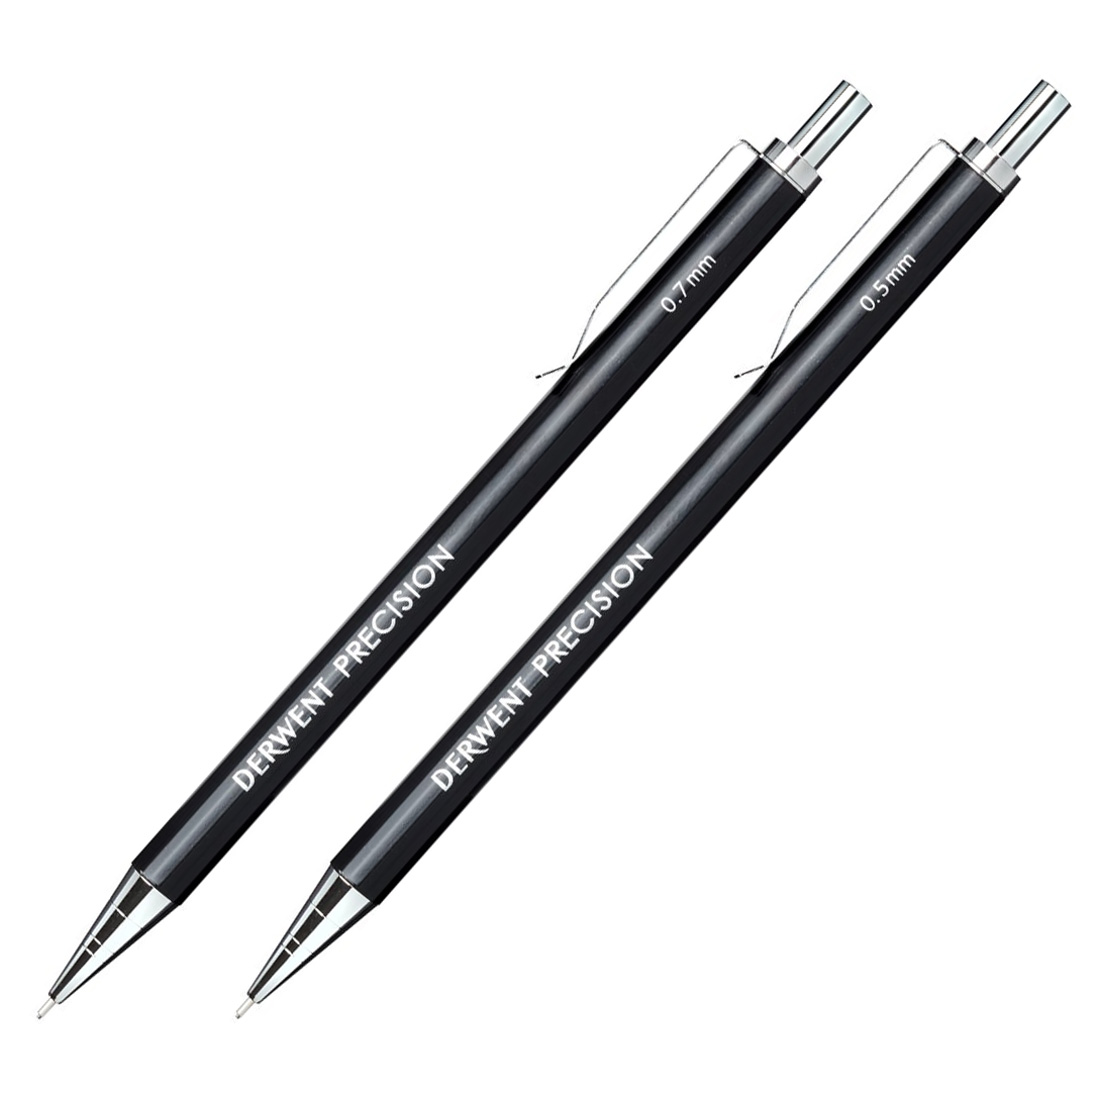 Pentel P205 Mechanical Pencil Review – Ian Hedley